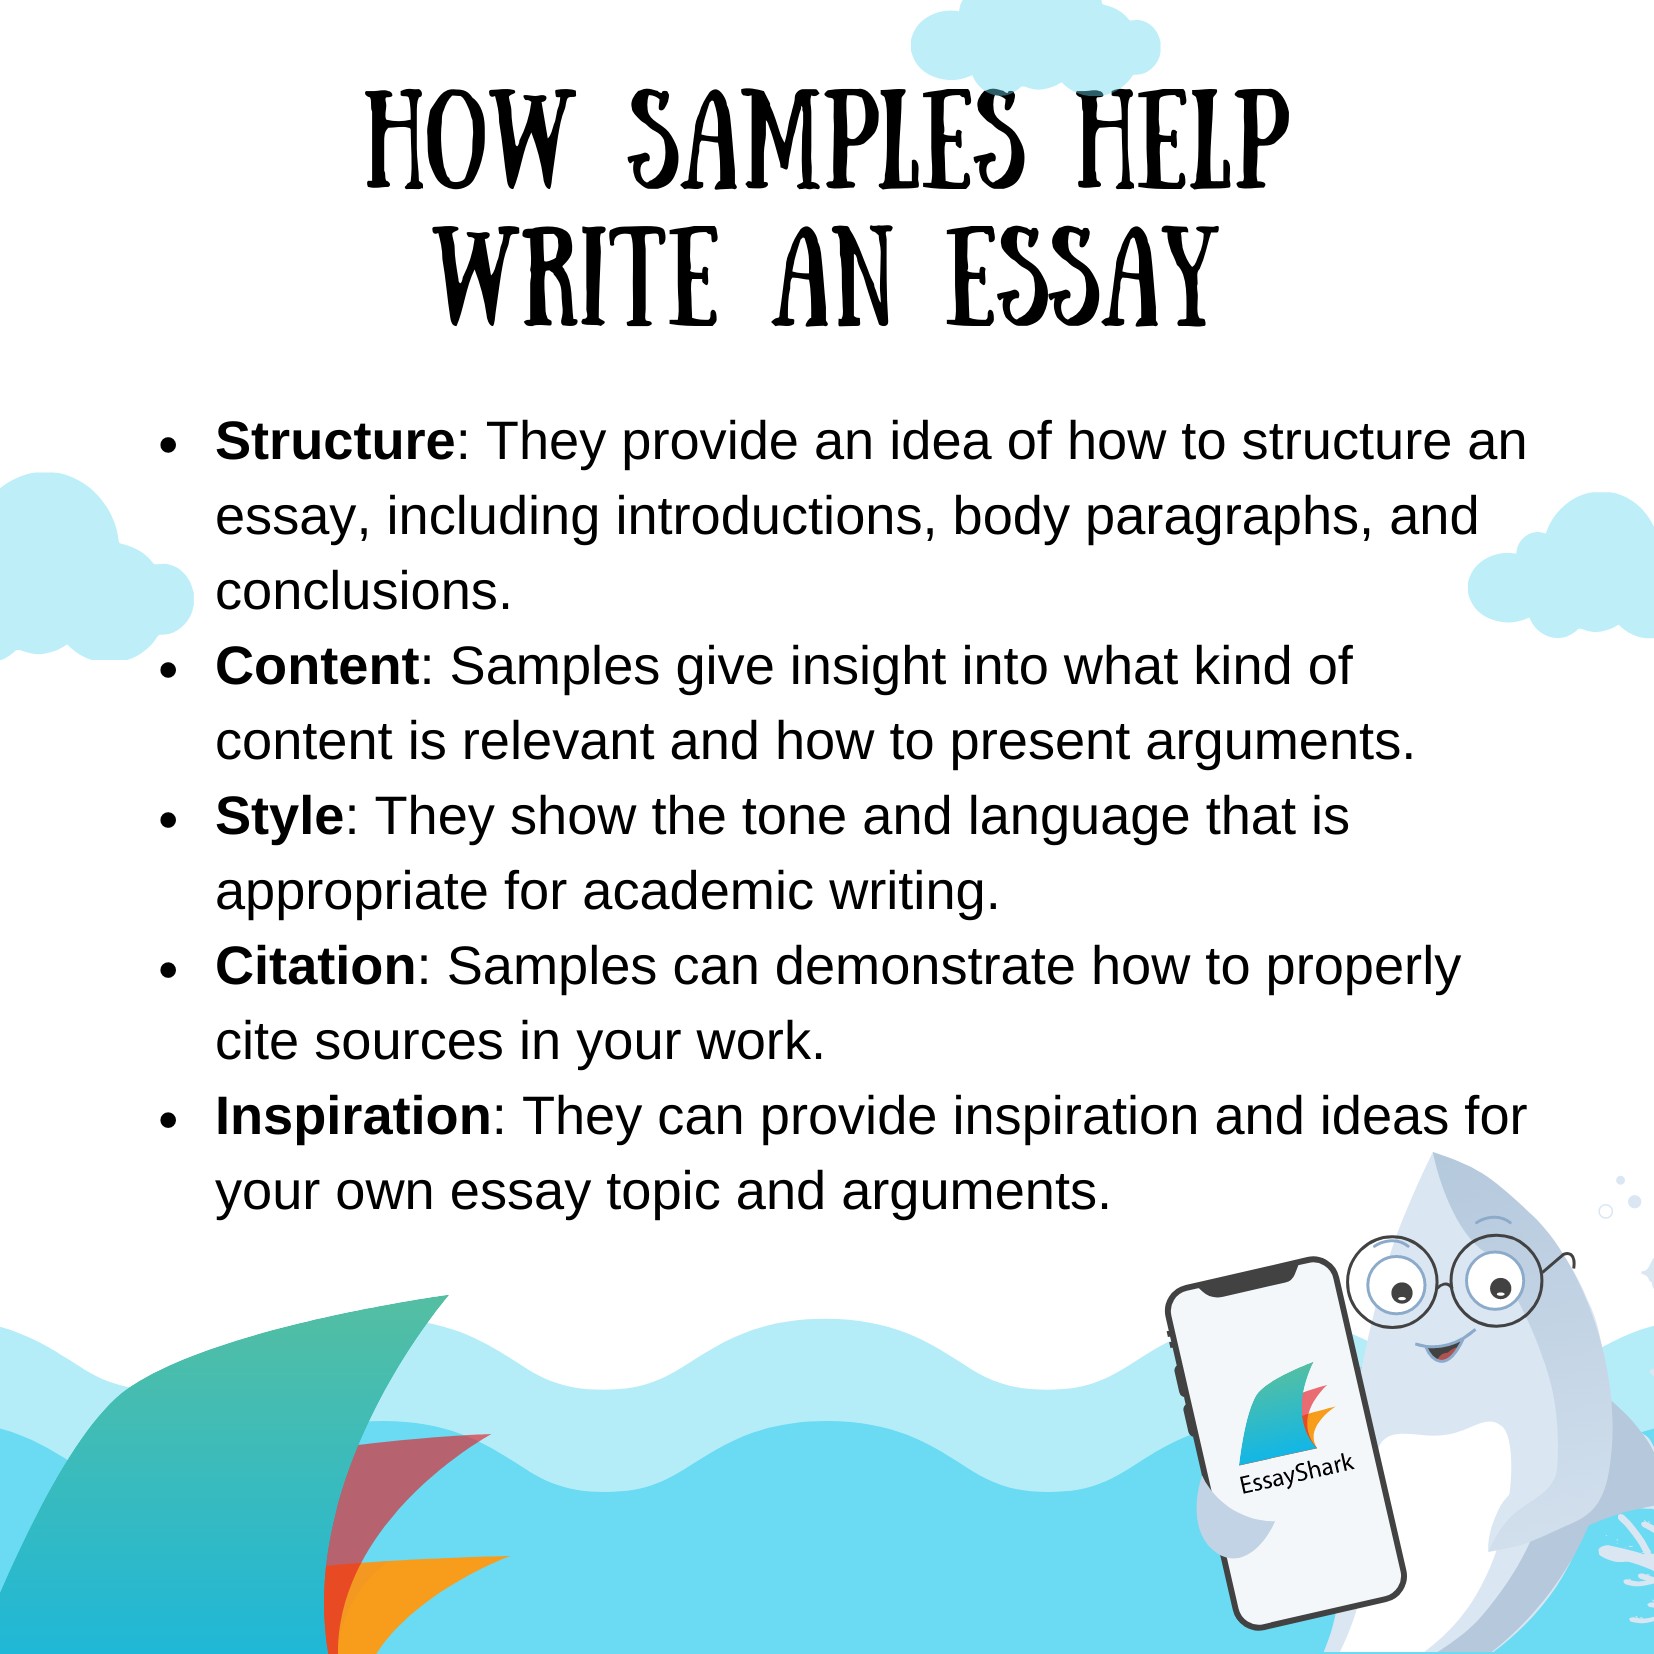 How Samples Help Write an Essay